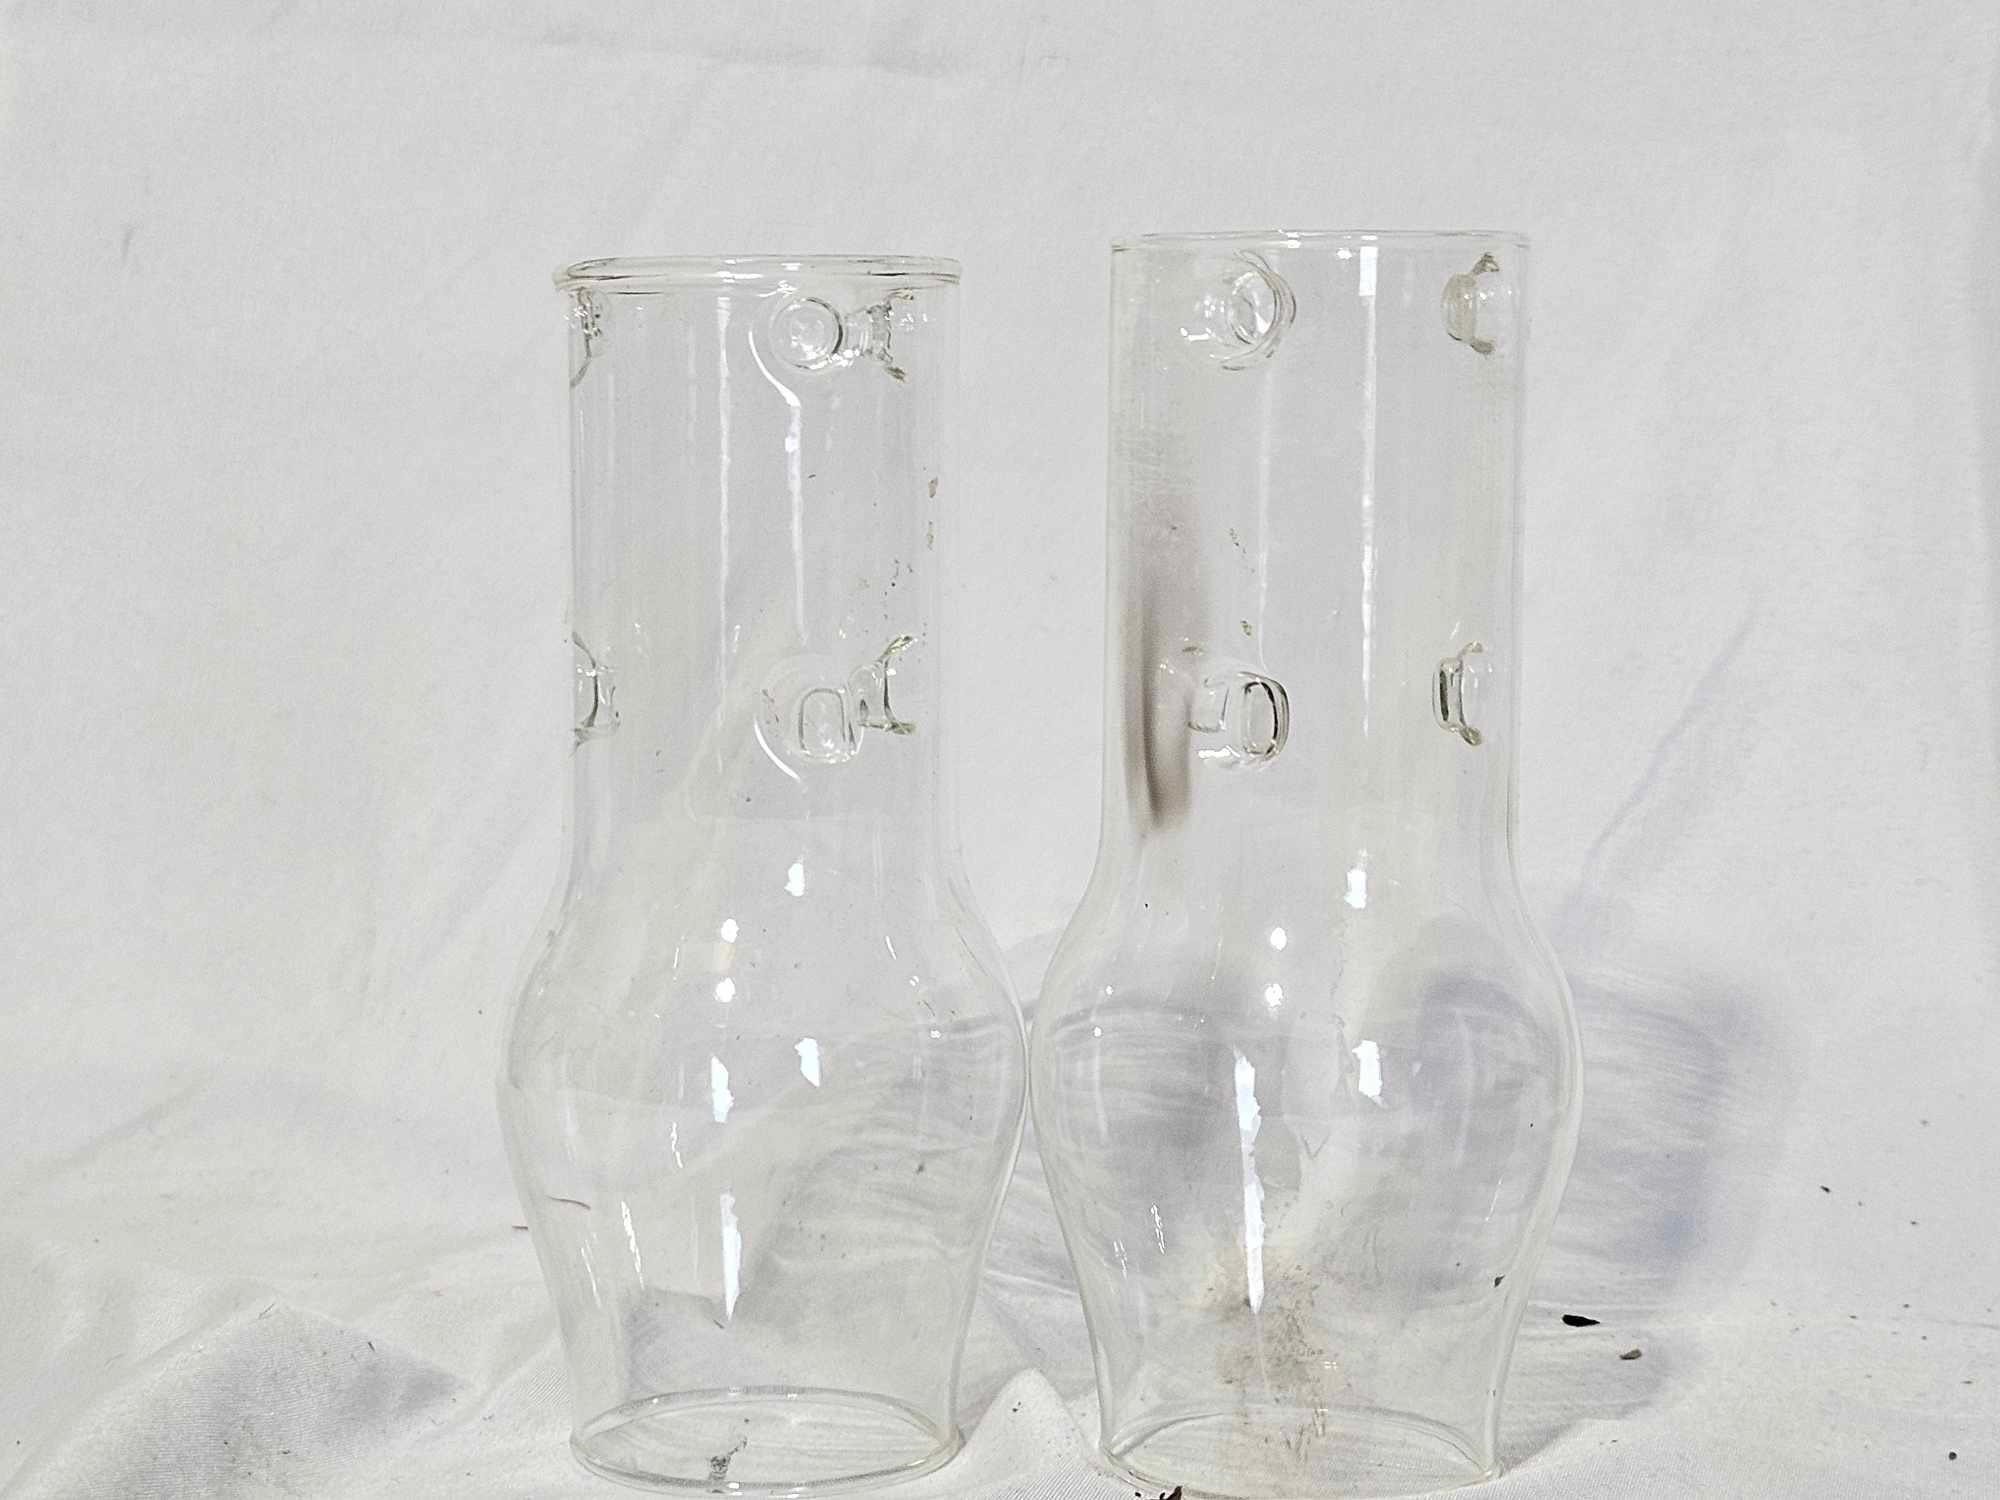 6 Inch Decorative Glass Hurricane